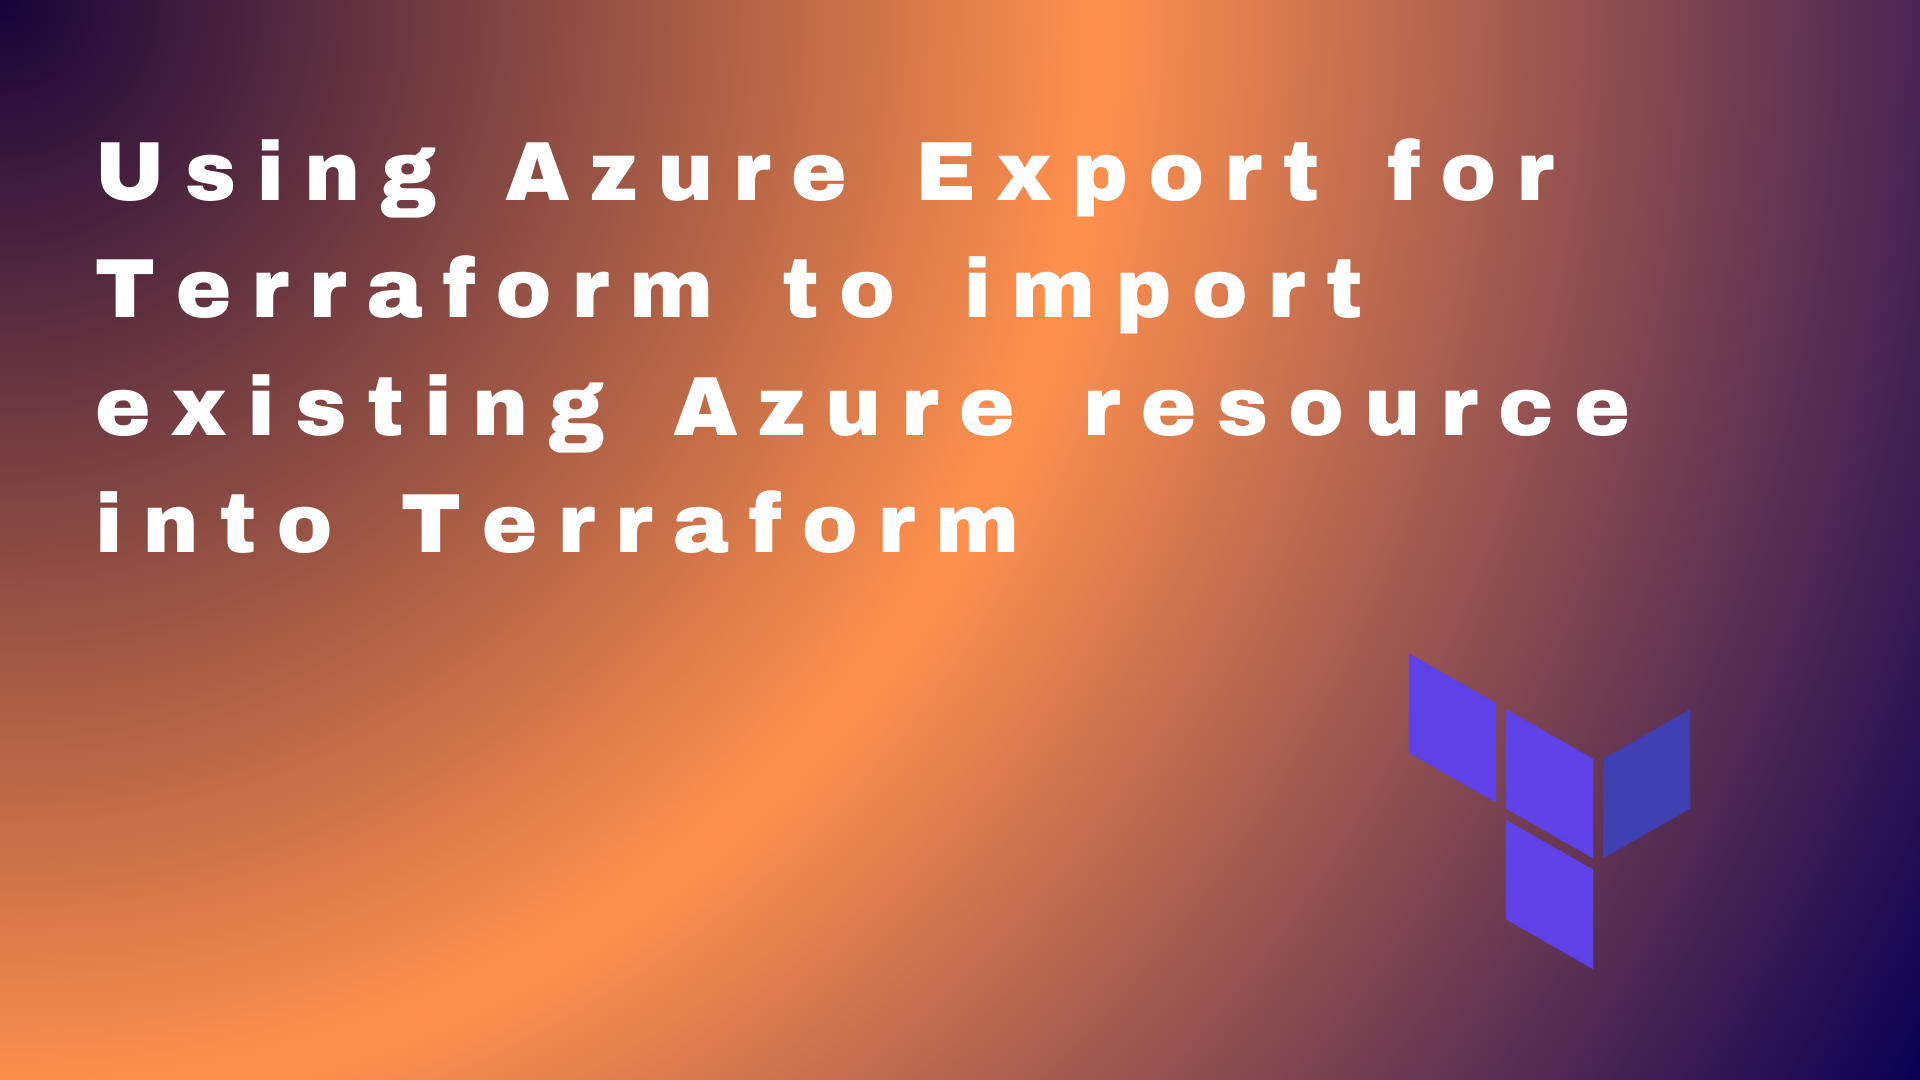 Using Azure Export for Terraform to import existing Azure resources into Terraform